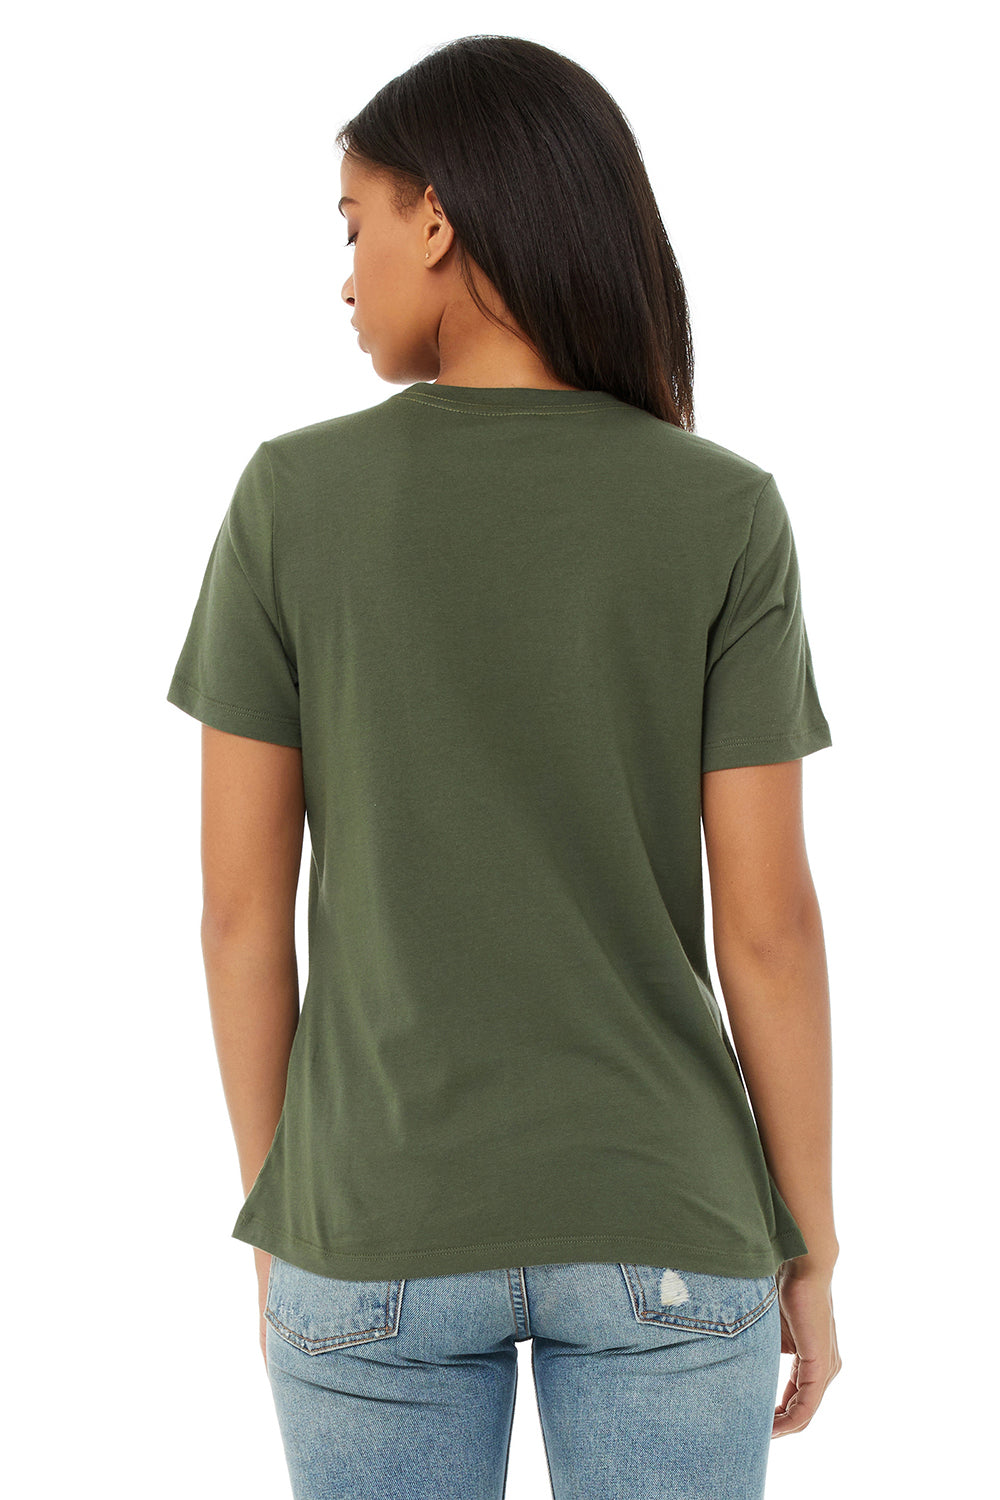 Bella + Canvas BC6400/B6400/6400 Womens Relaxed Jersey Short Sleeve Crewneck T-Shirt Military Green Model Back